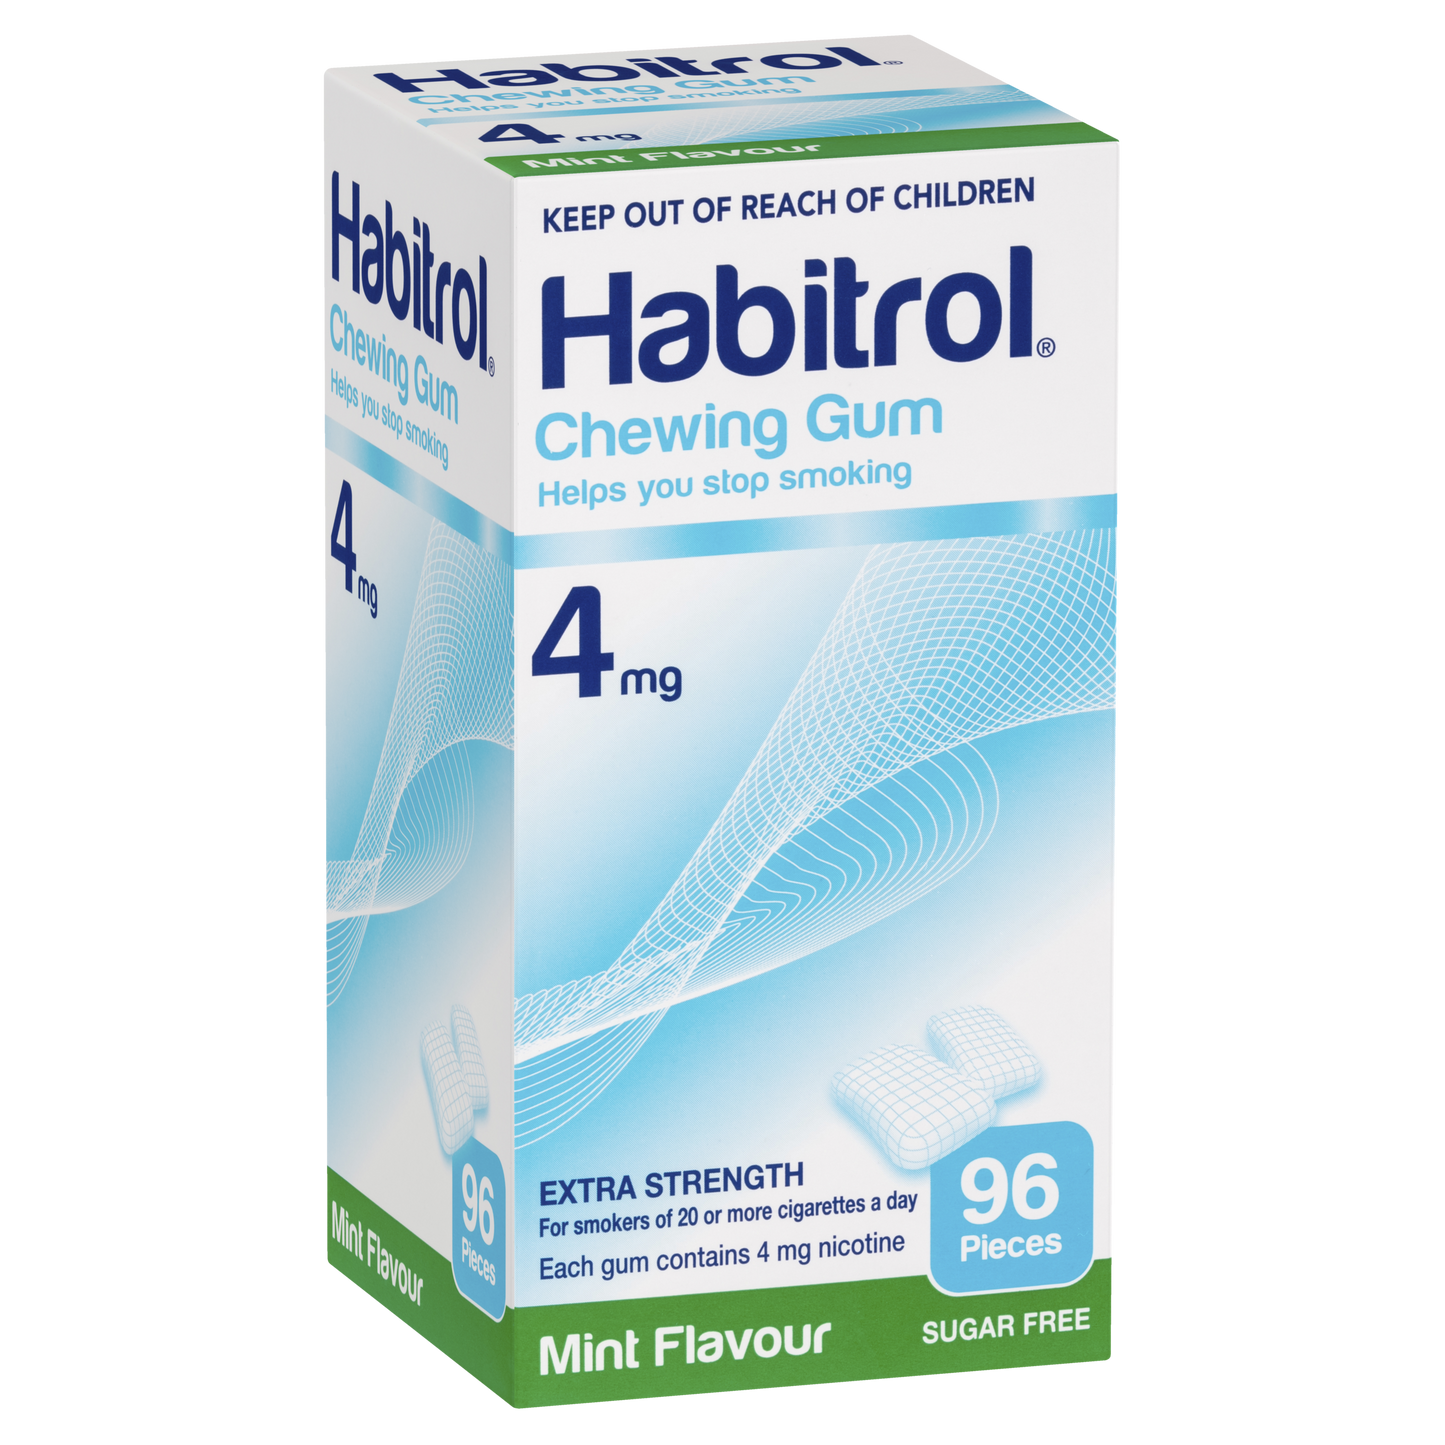 Habitrol Chewing Gum 4mg - Mint